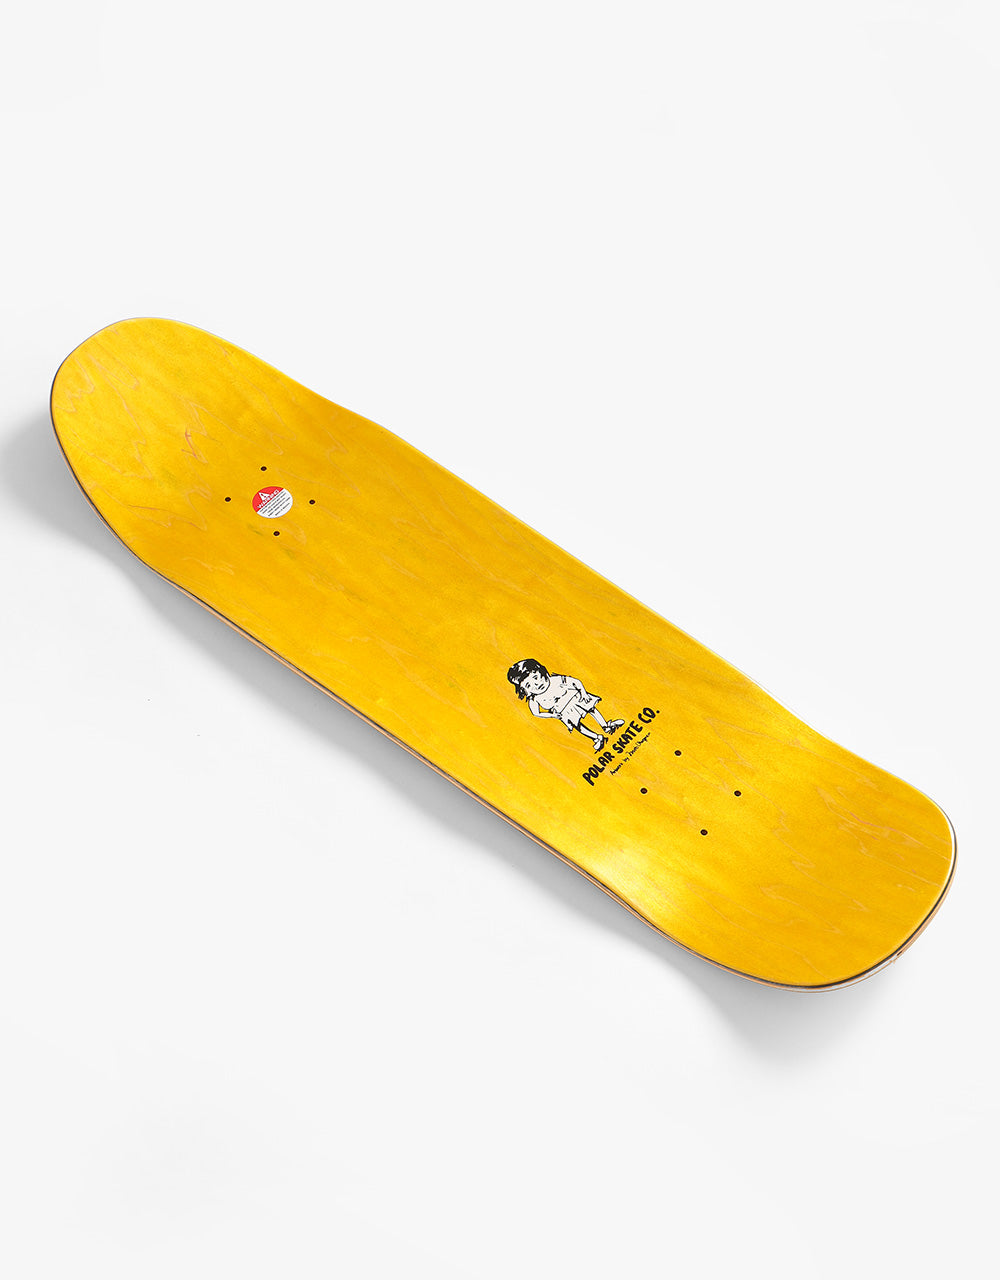 Polar Boserio Year 2020 Skateboard Deck - 1991 Jr. Shape 8.65"